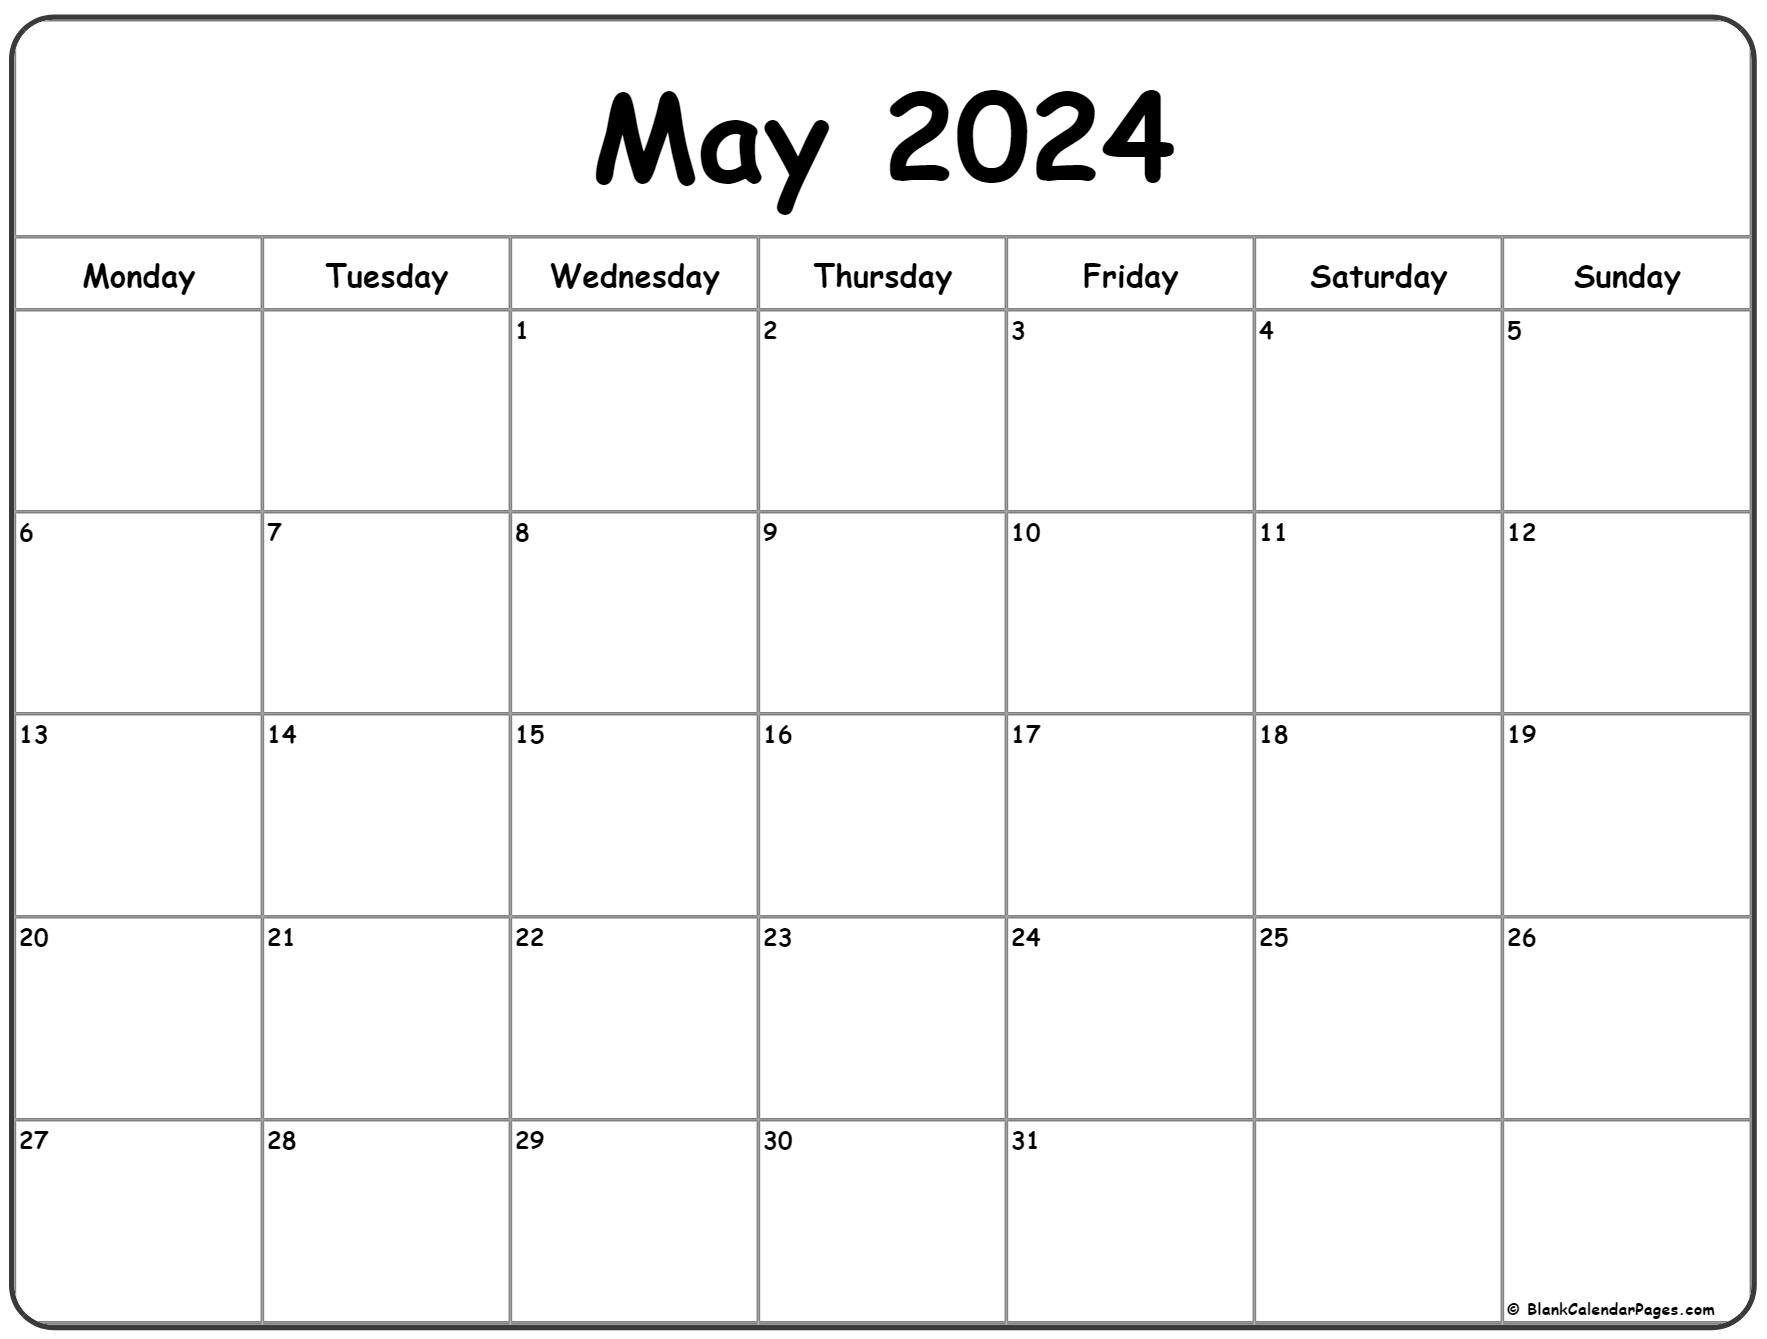 May 2024 Monday Calendar | Monday To Sunday | May 2024 Calendar Printable